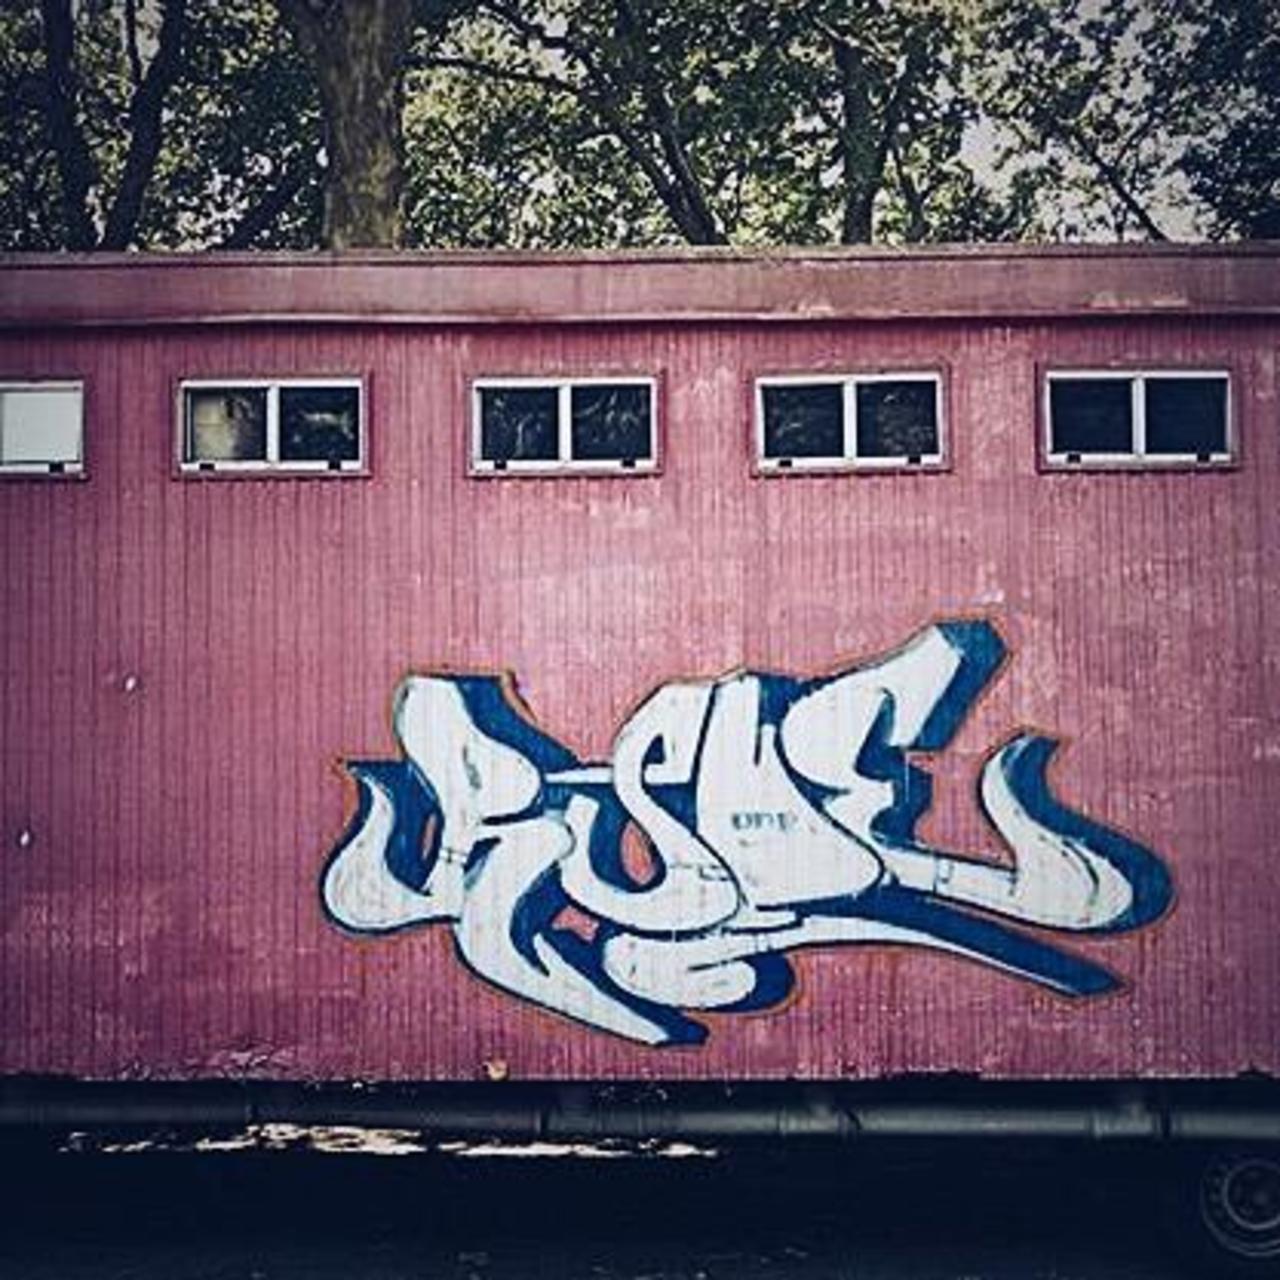 RT @artpushr: via #super9seals "http://bit.ly/1MizMxO" #graffiti #streetart http://t.co/KhzVhWlTY8